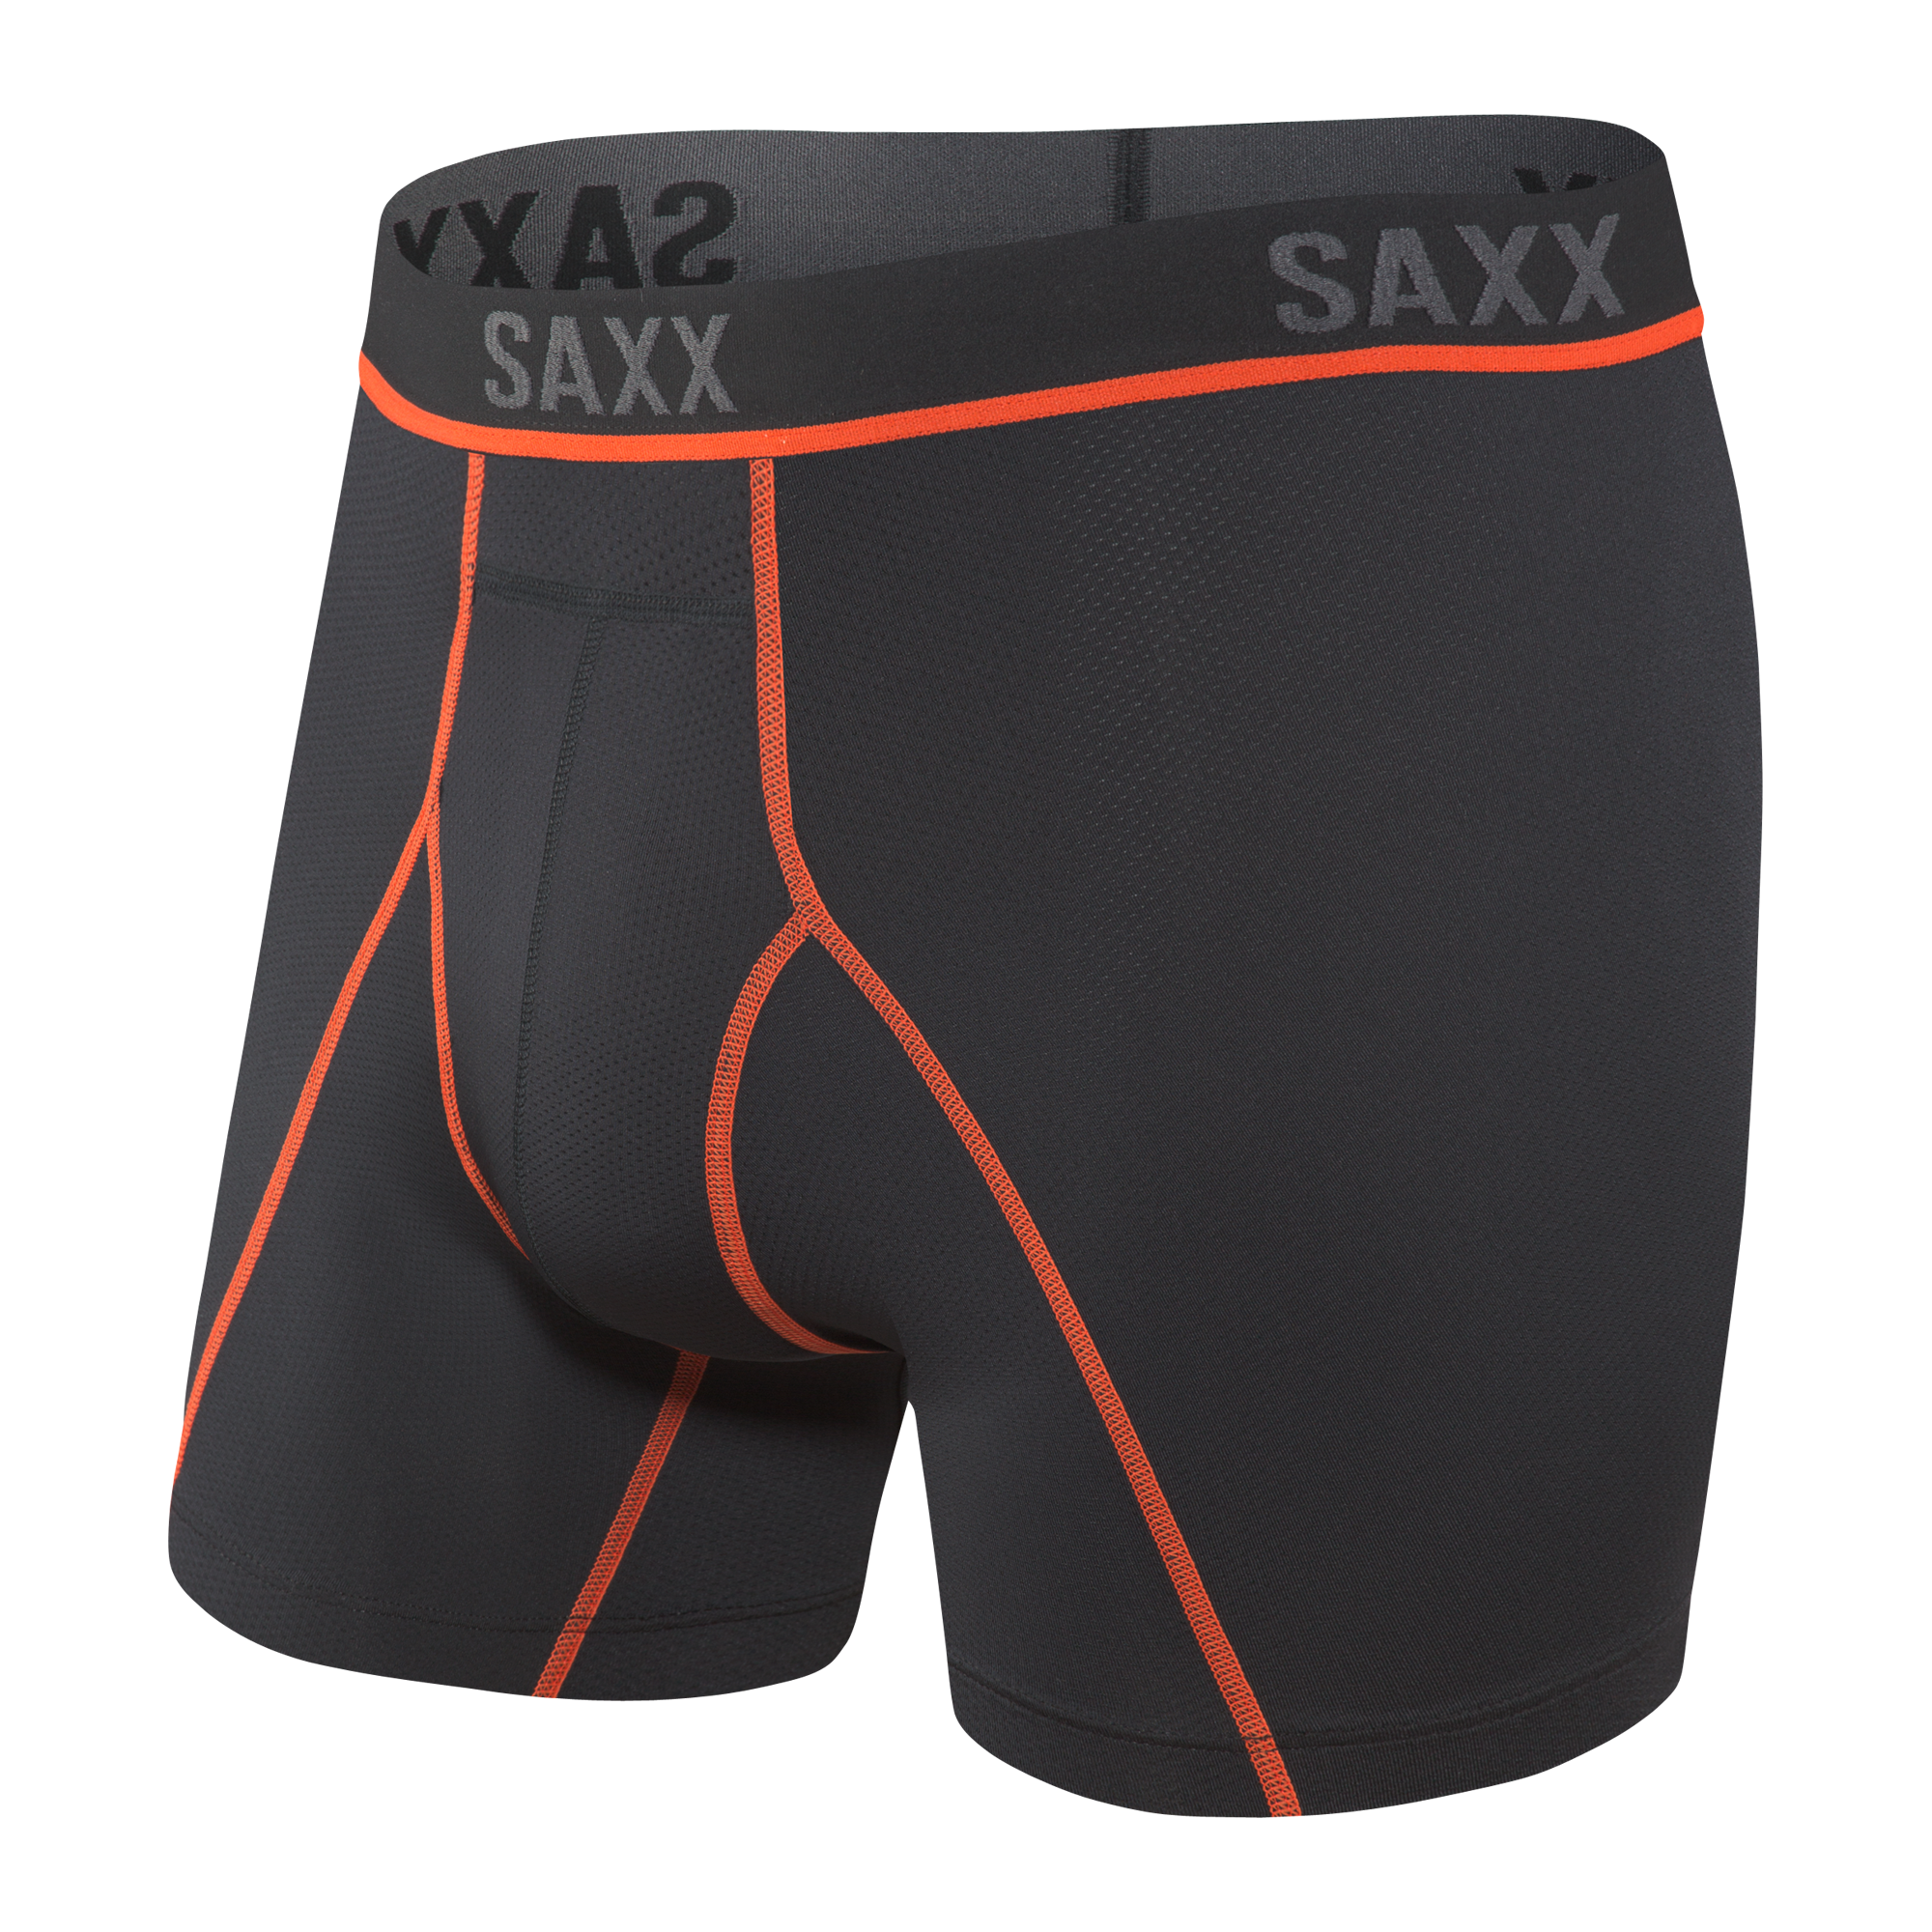 Saxx Kinetic Boxer Brief - Men's, Underwear